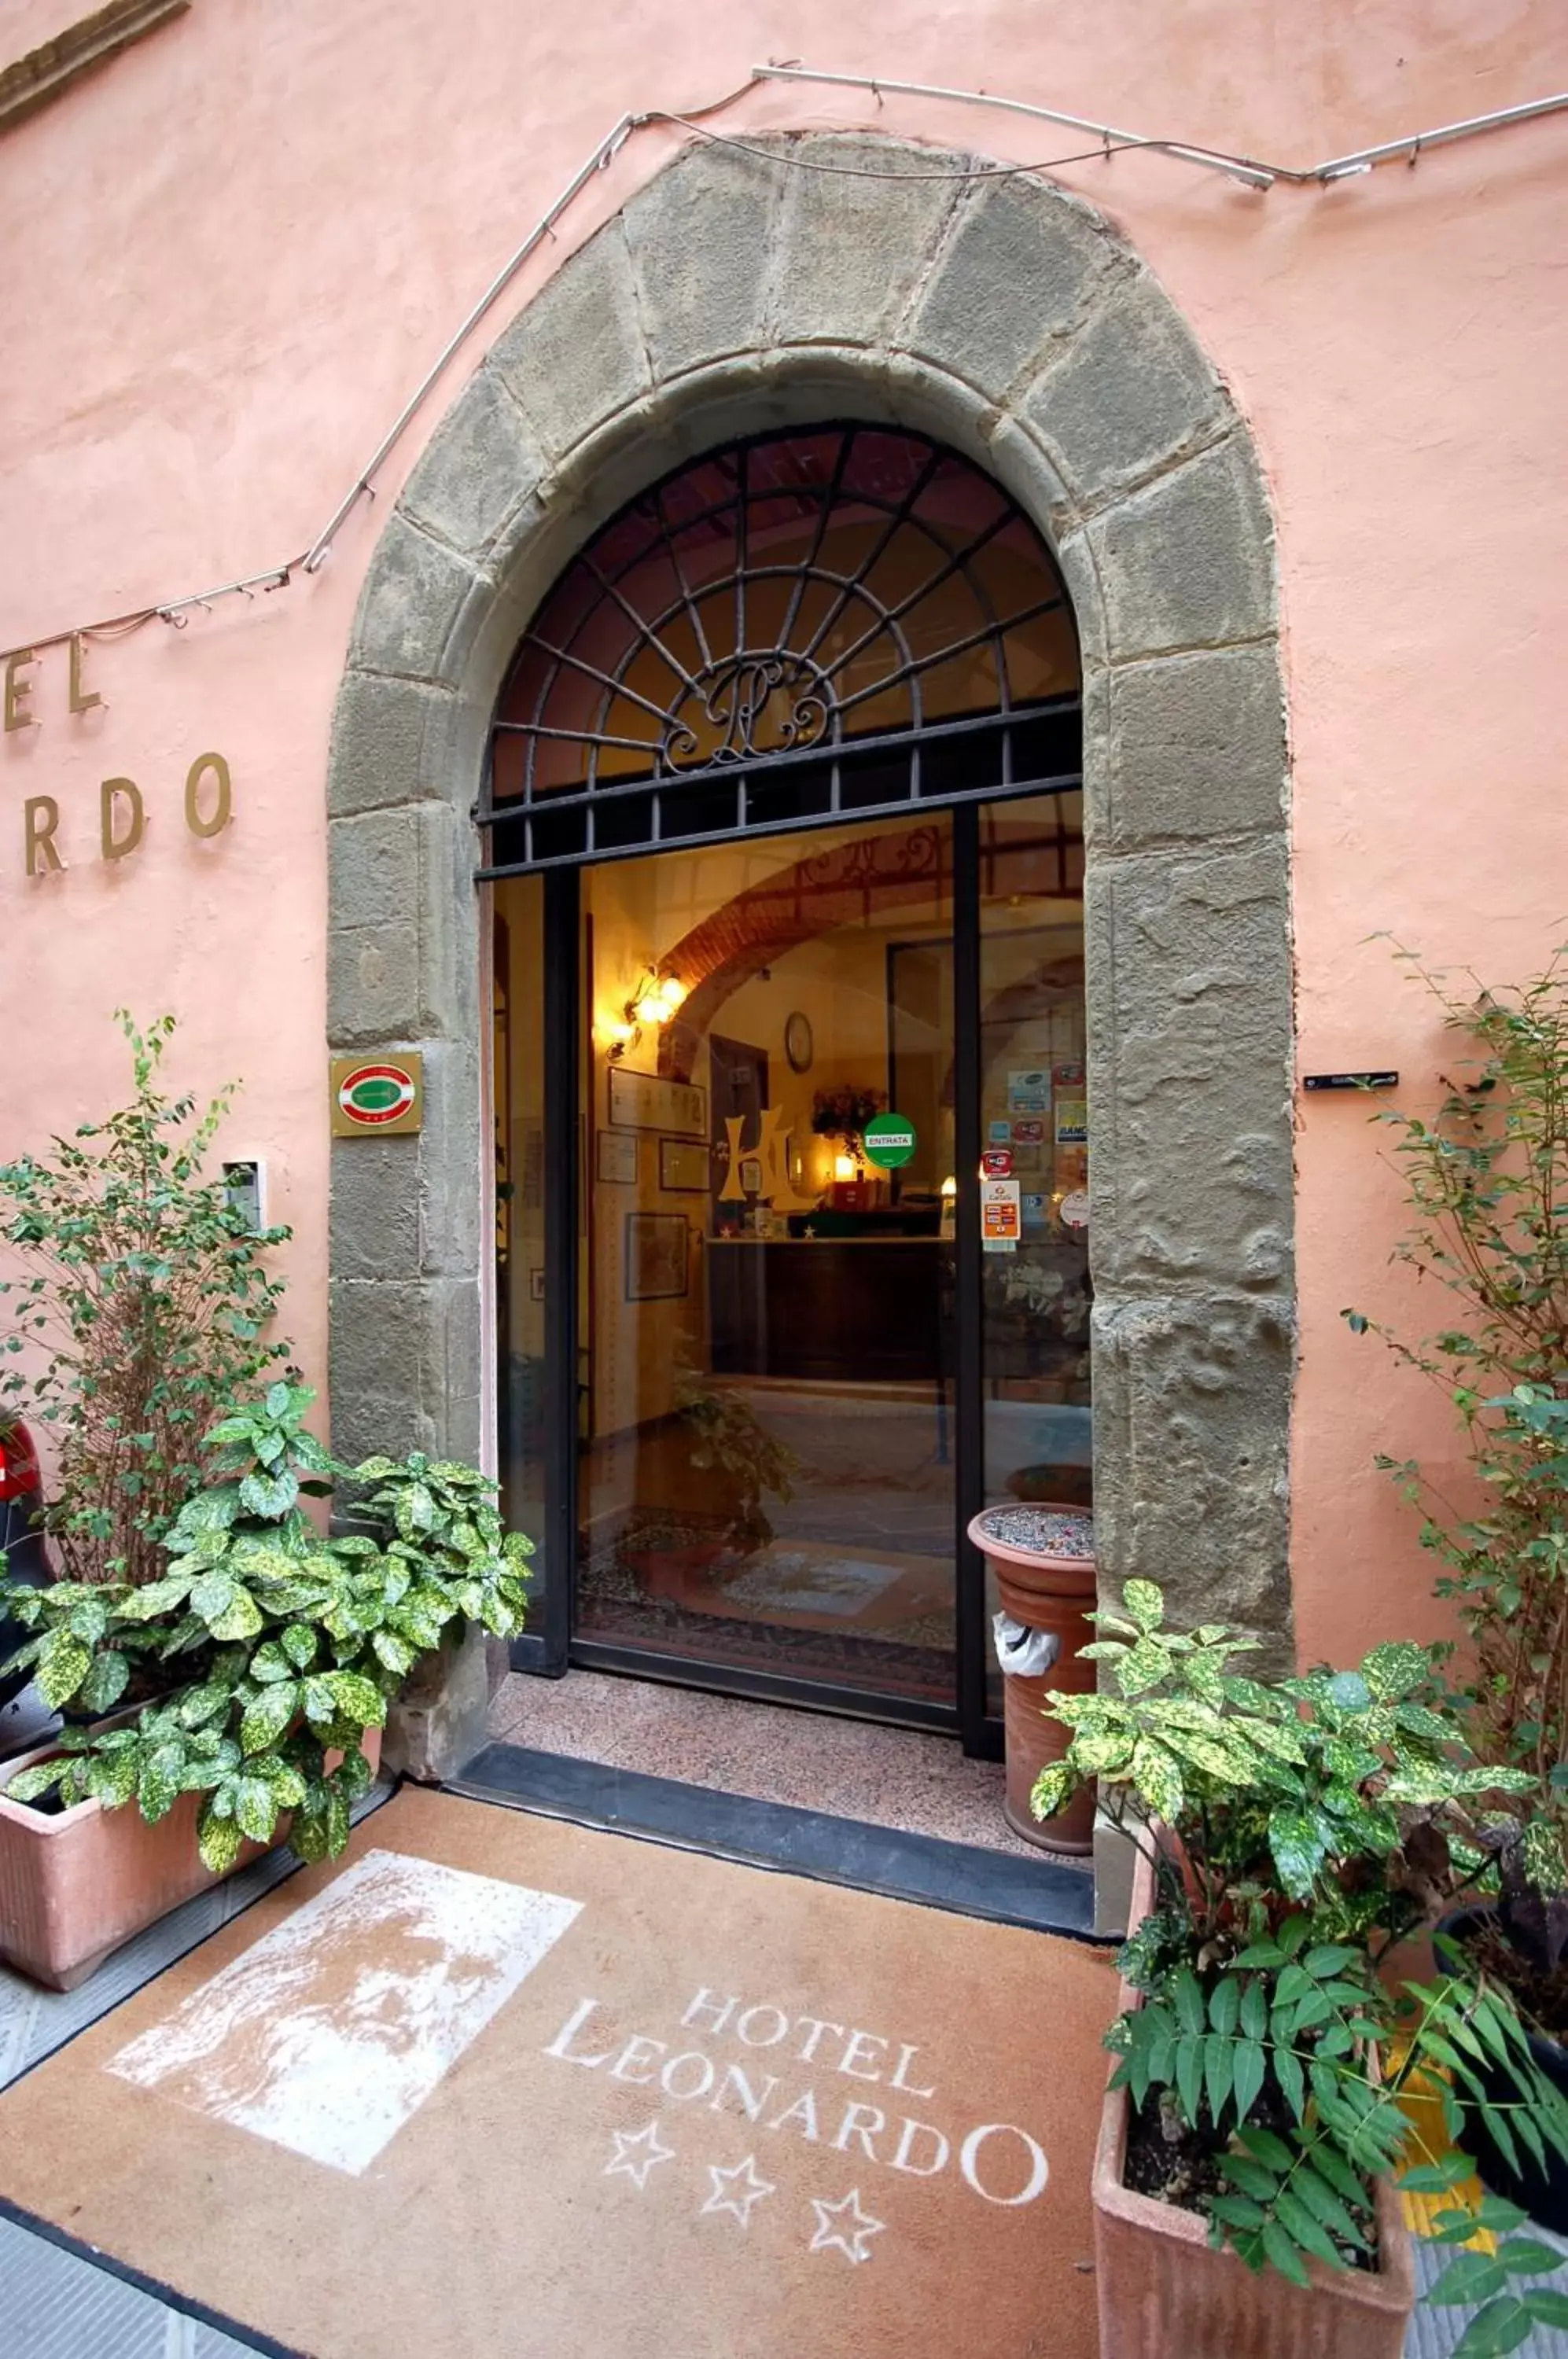 Facade/entrance in Hotel Leonardo